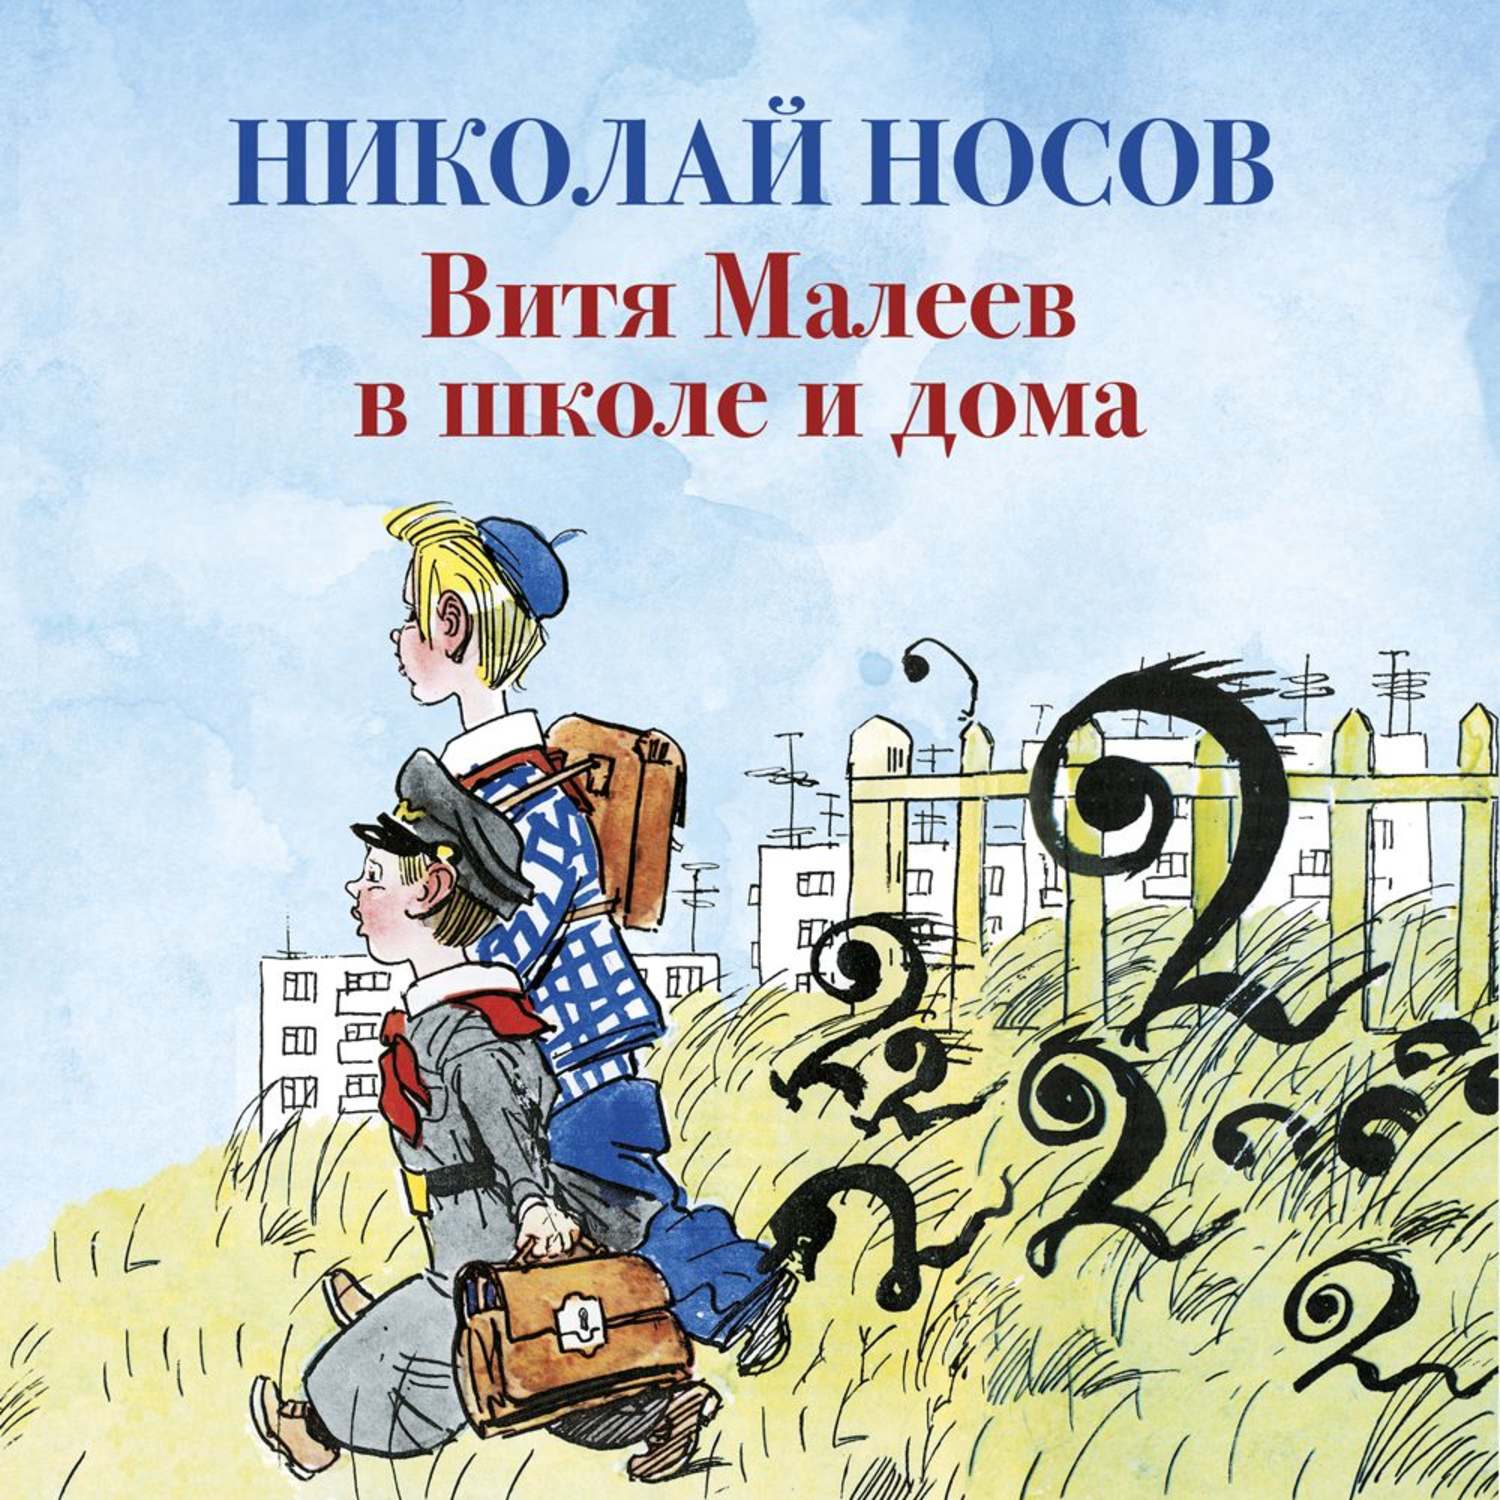 Сказка про школу для детей. Н. Н. Носов Витя Малеев в школе.